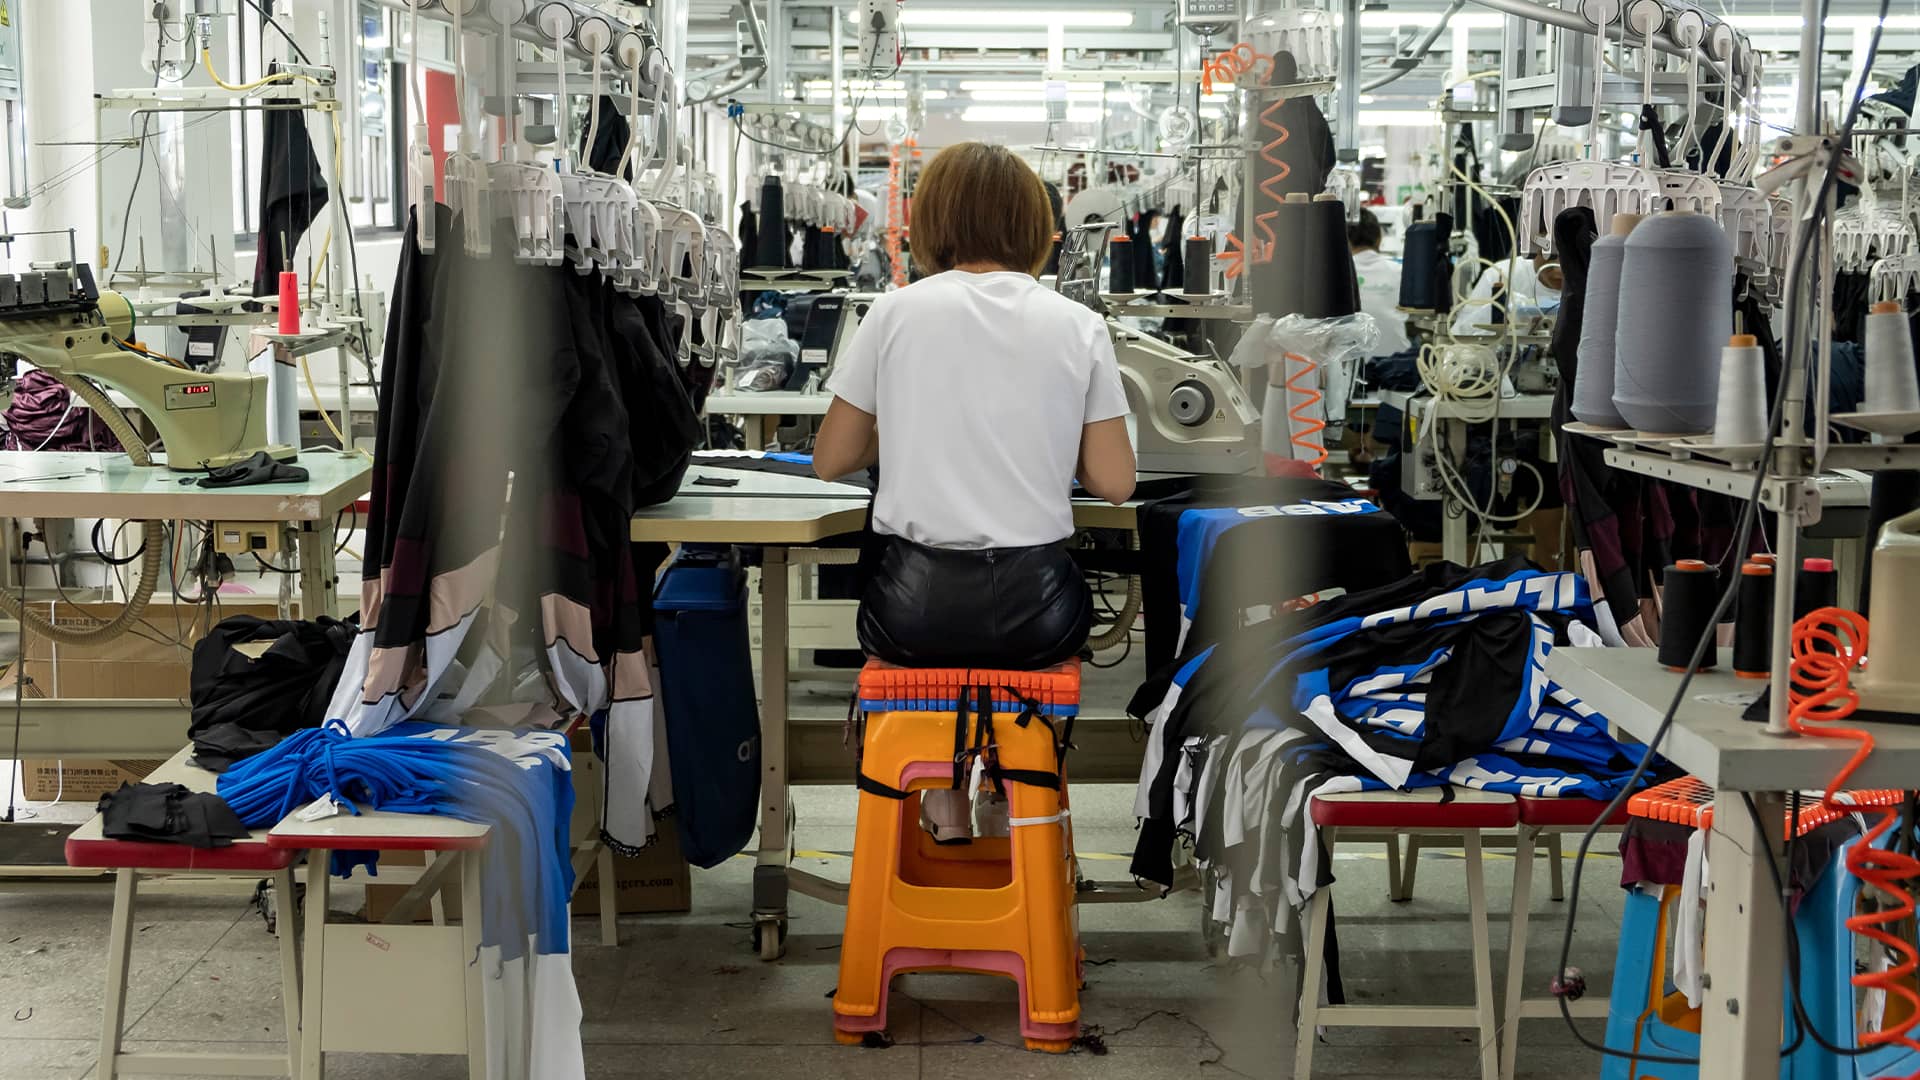 A woman working in a textile sweatshop